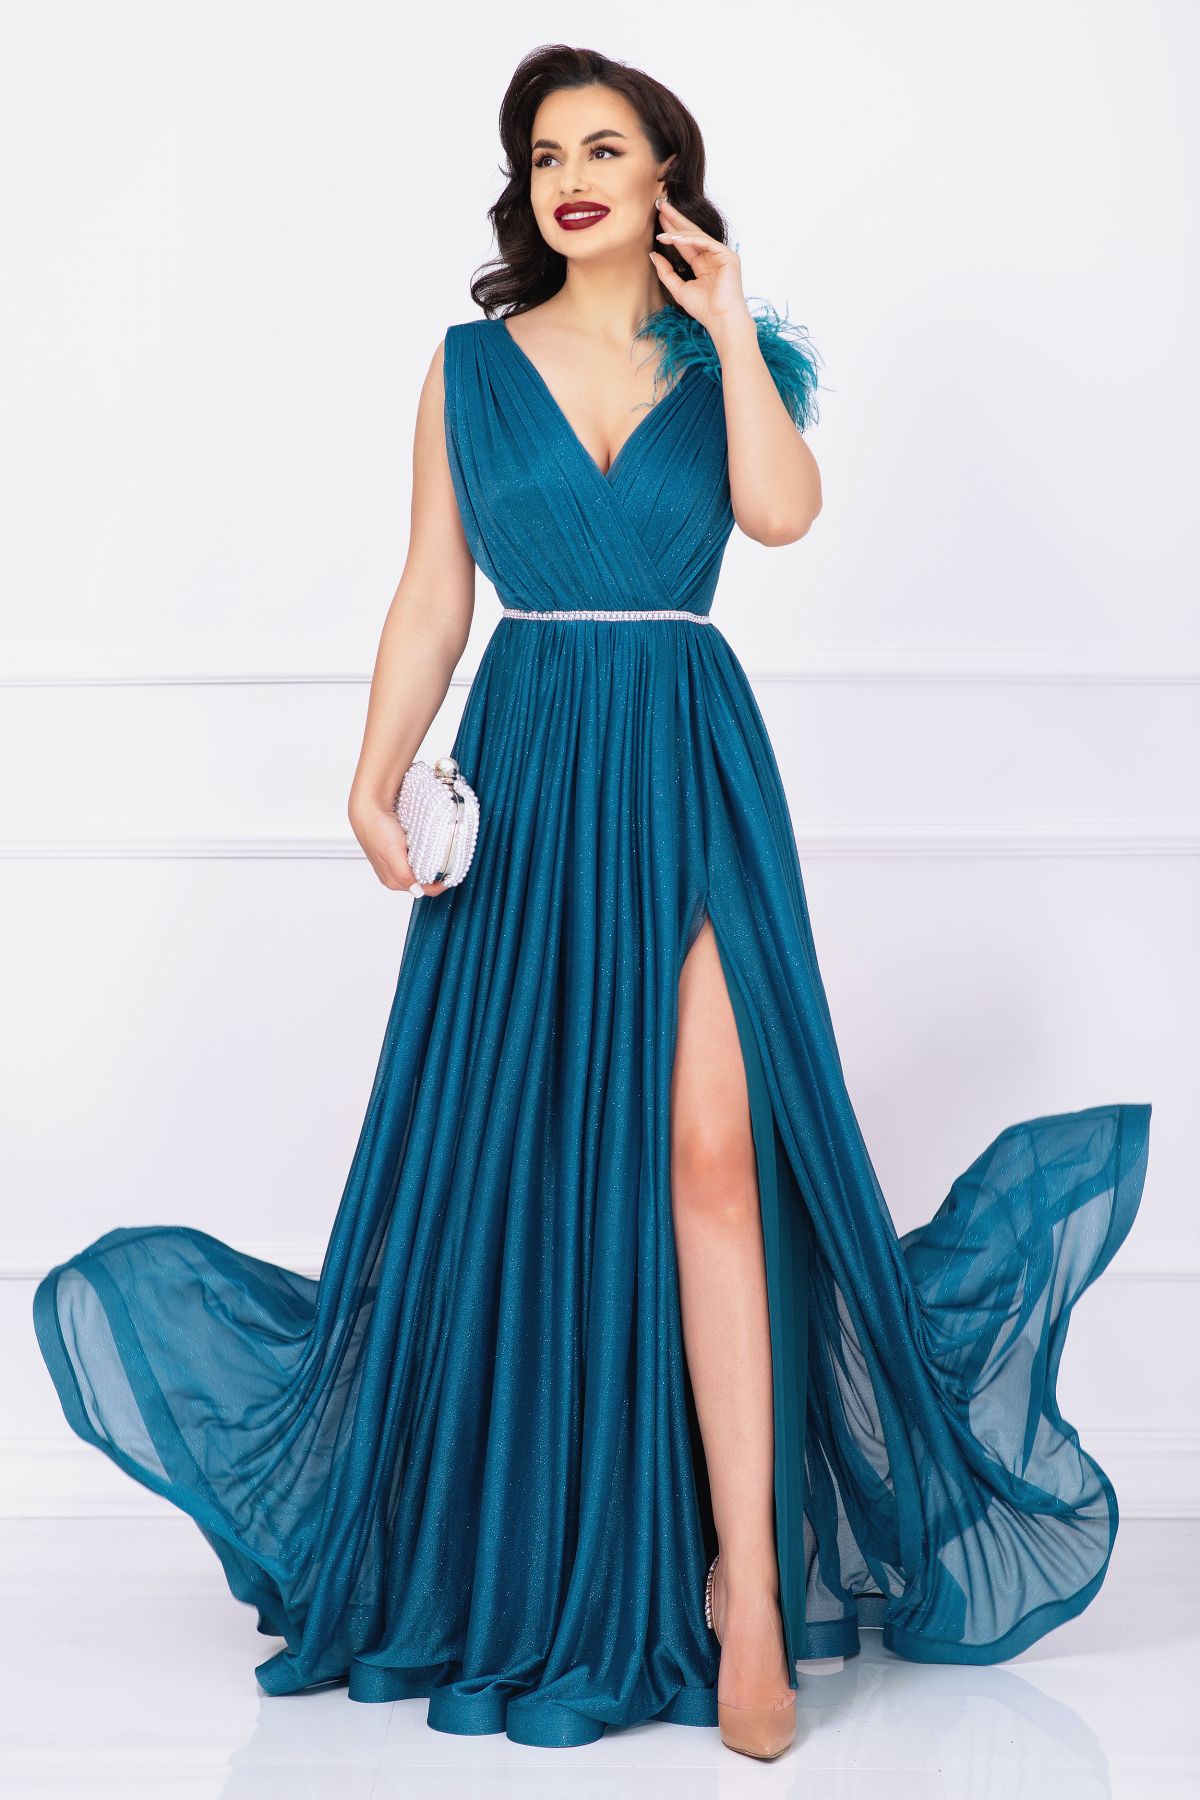 Rochie lunga de seara Maia turquoise eleganta cu sclipici si accesoriu cu fulgi